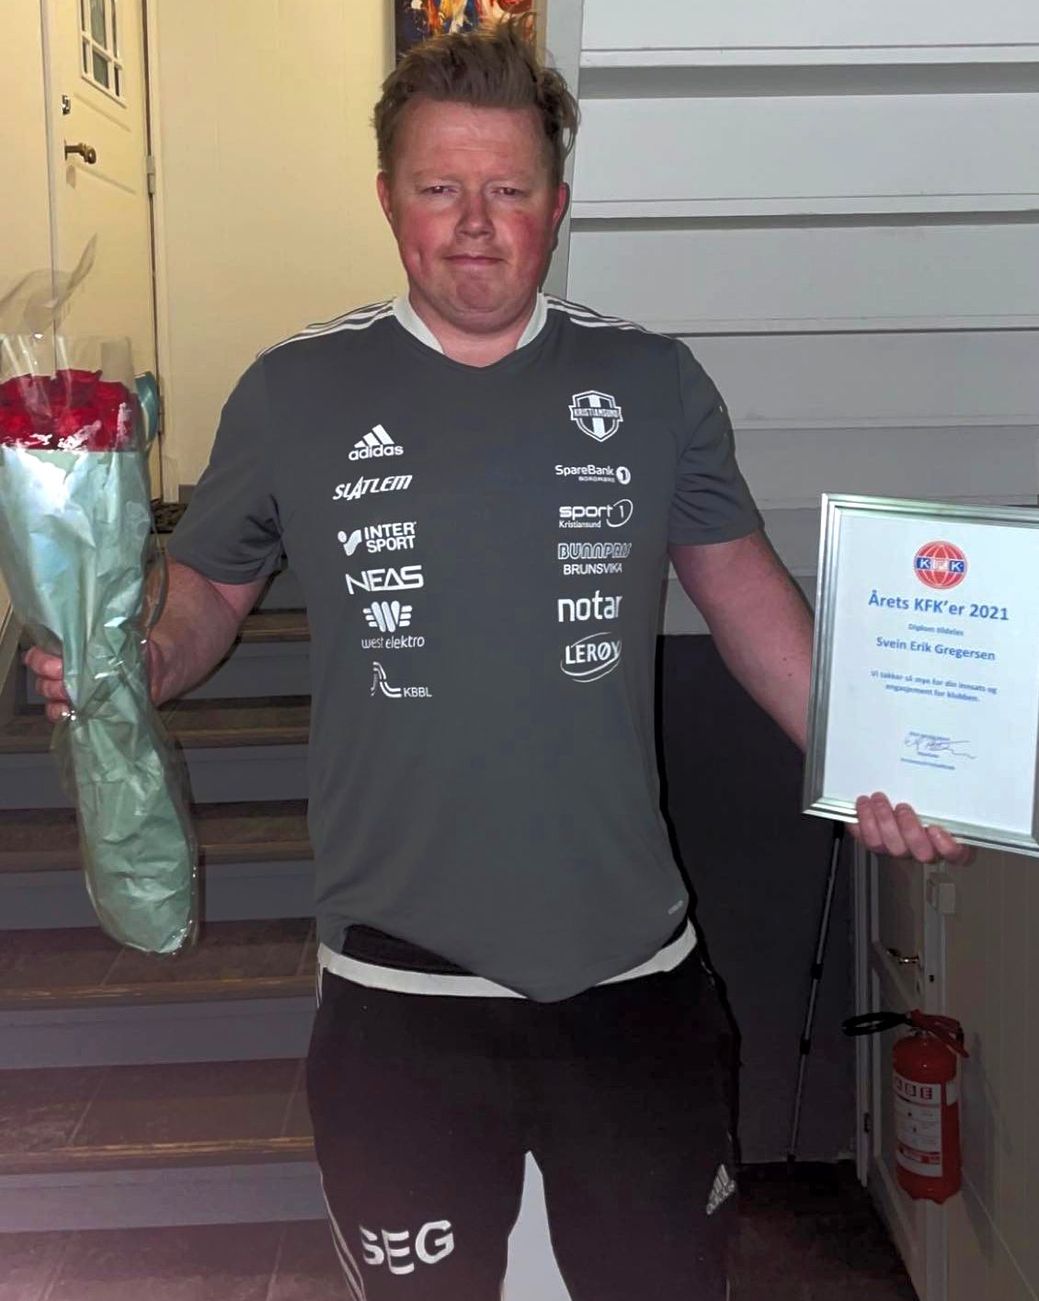 Årets KFK'er 2021 Svein Erik Gregersen